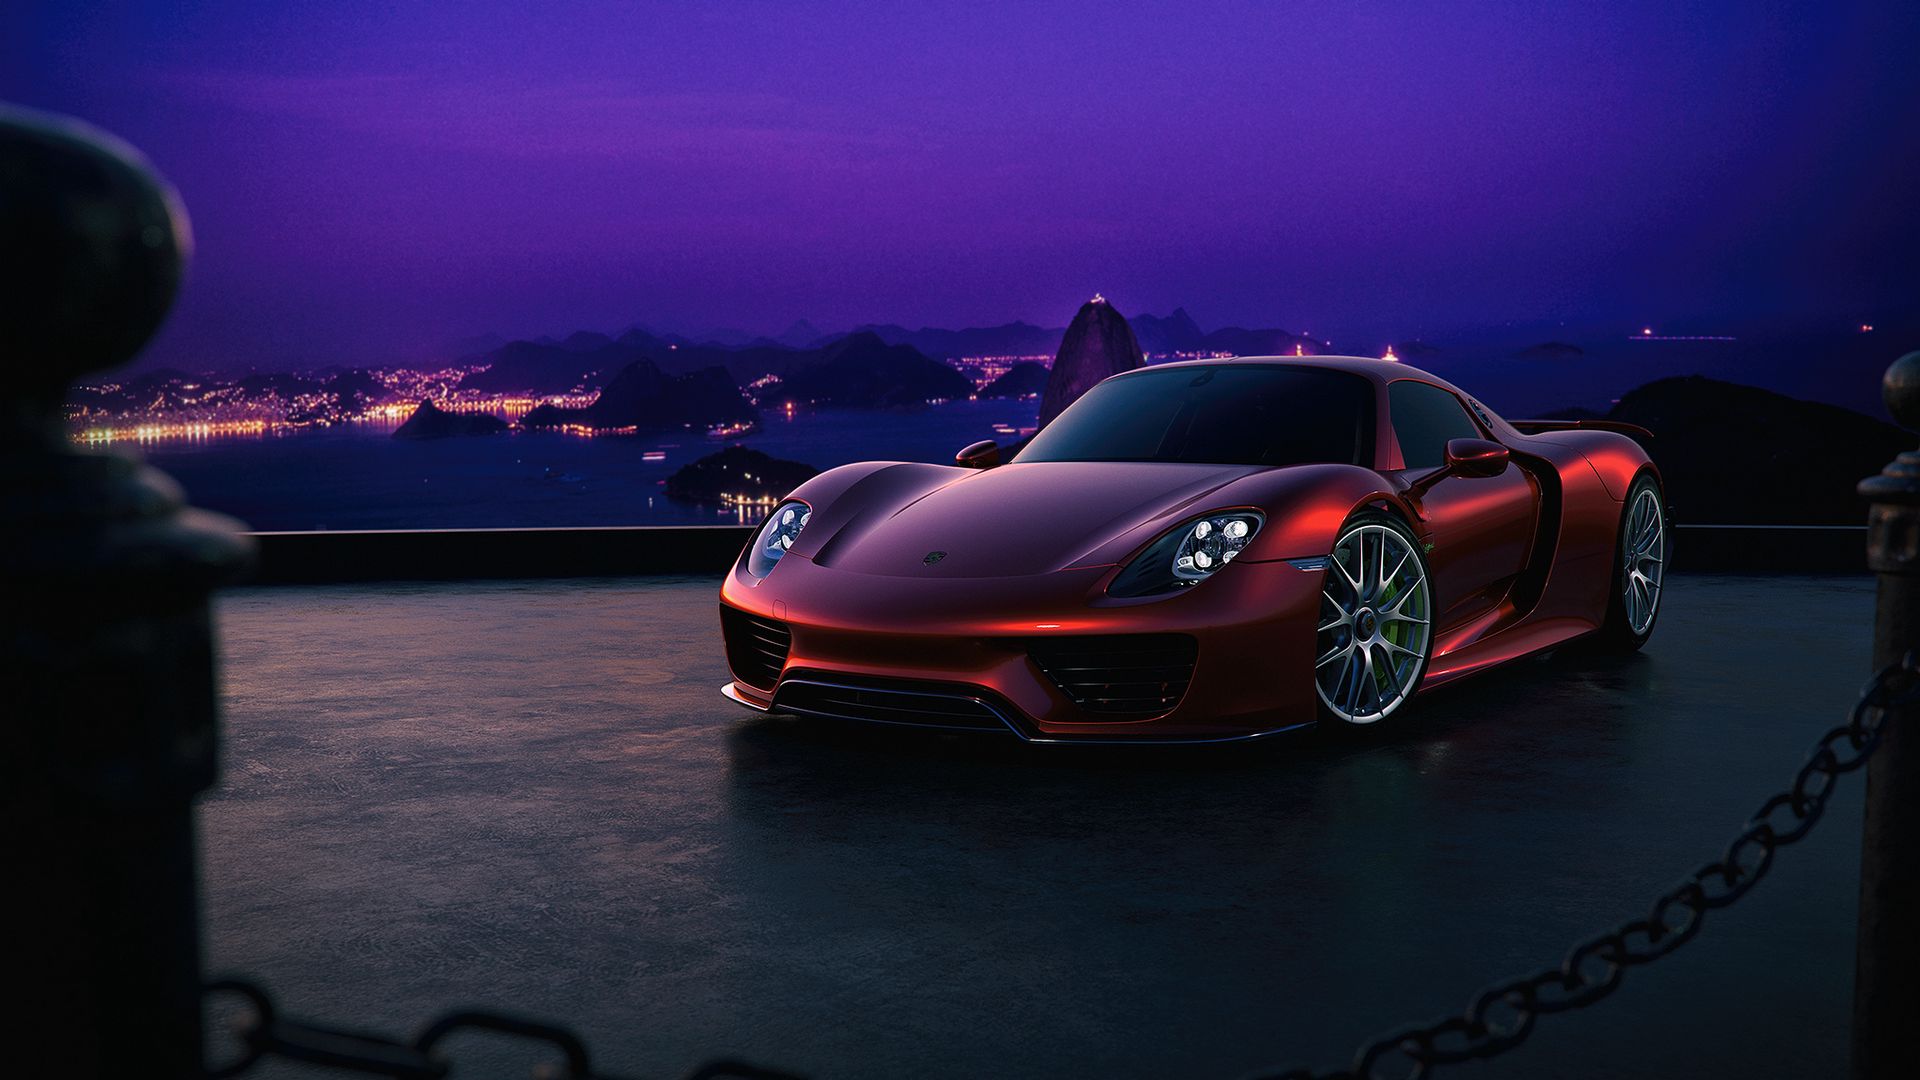 Porsche 918 Spyder Desktop HD Cars 4k Wallpapers Images Backgrounds  Photos and Pictures